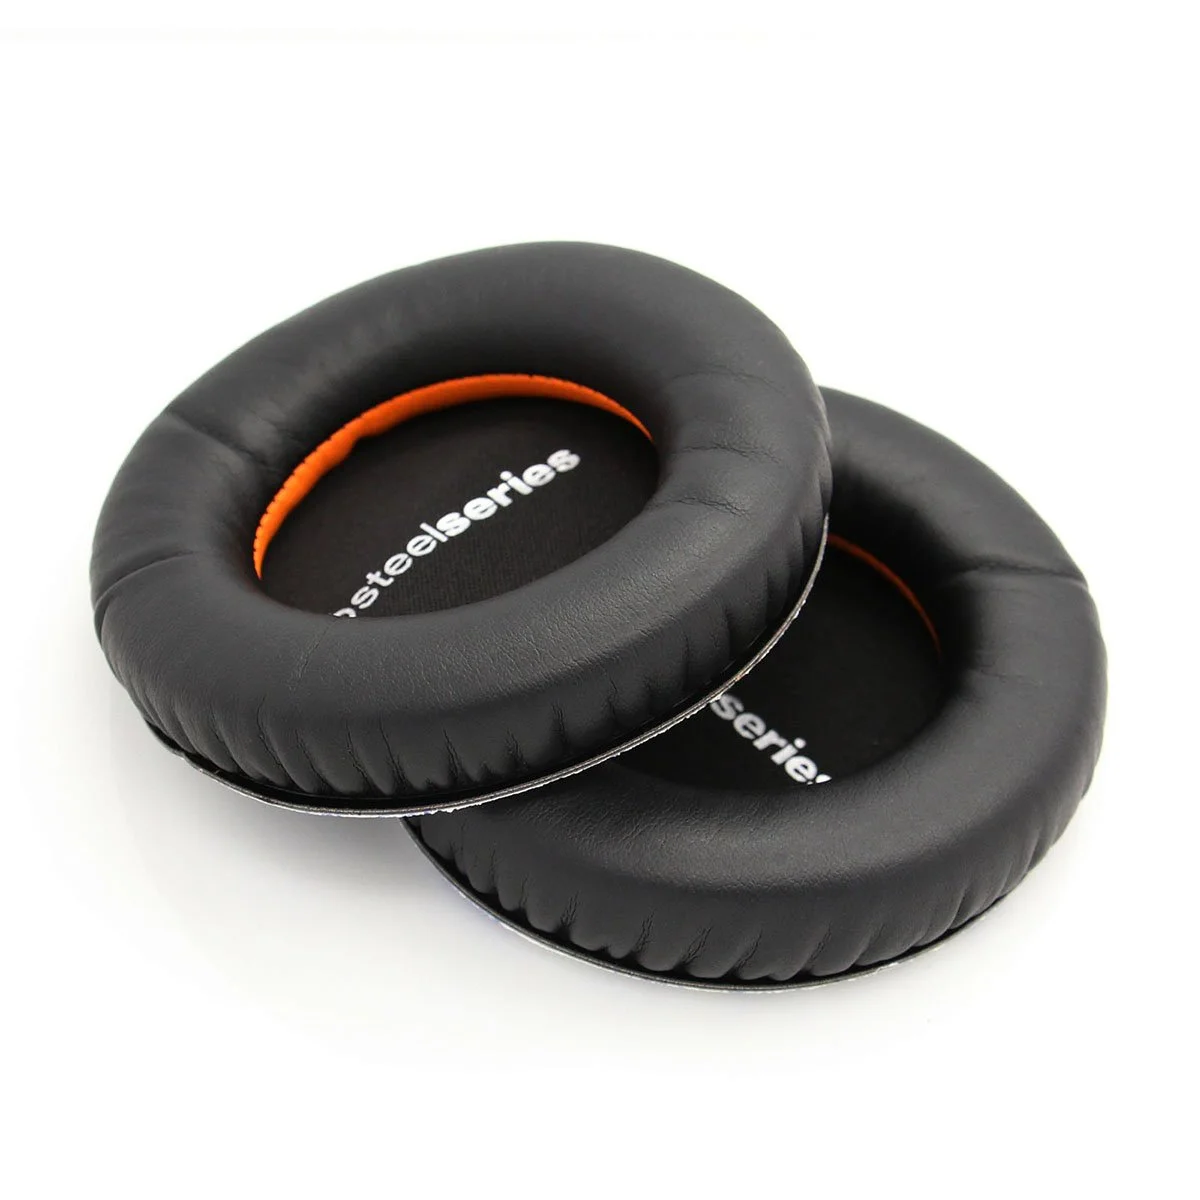 

1Pair Replacement Soft Foam Ear Pads Earpads Cushion Headband for SteelSeries Siberia 200 V1 V2 V3 Full-Size Gaming Headphones